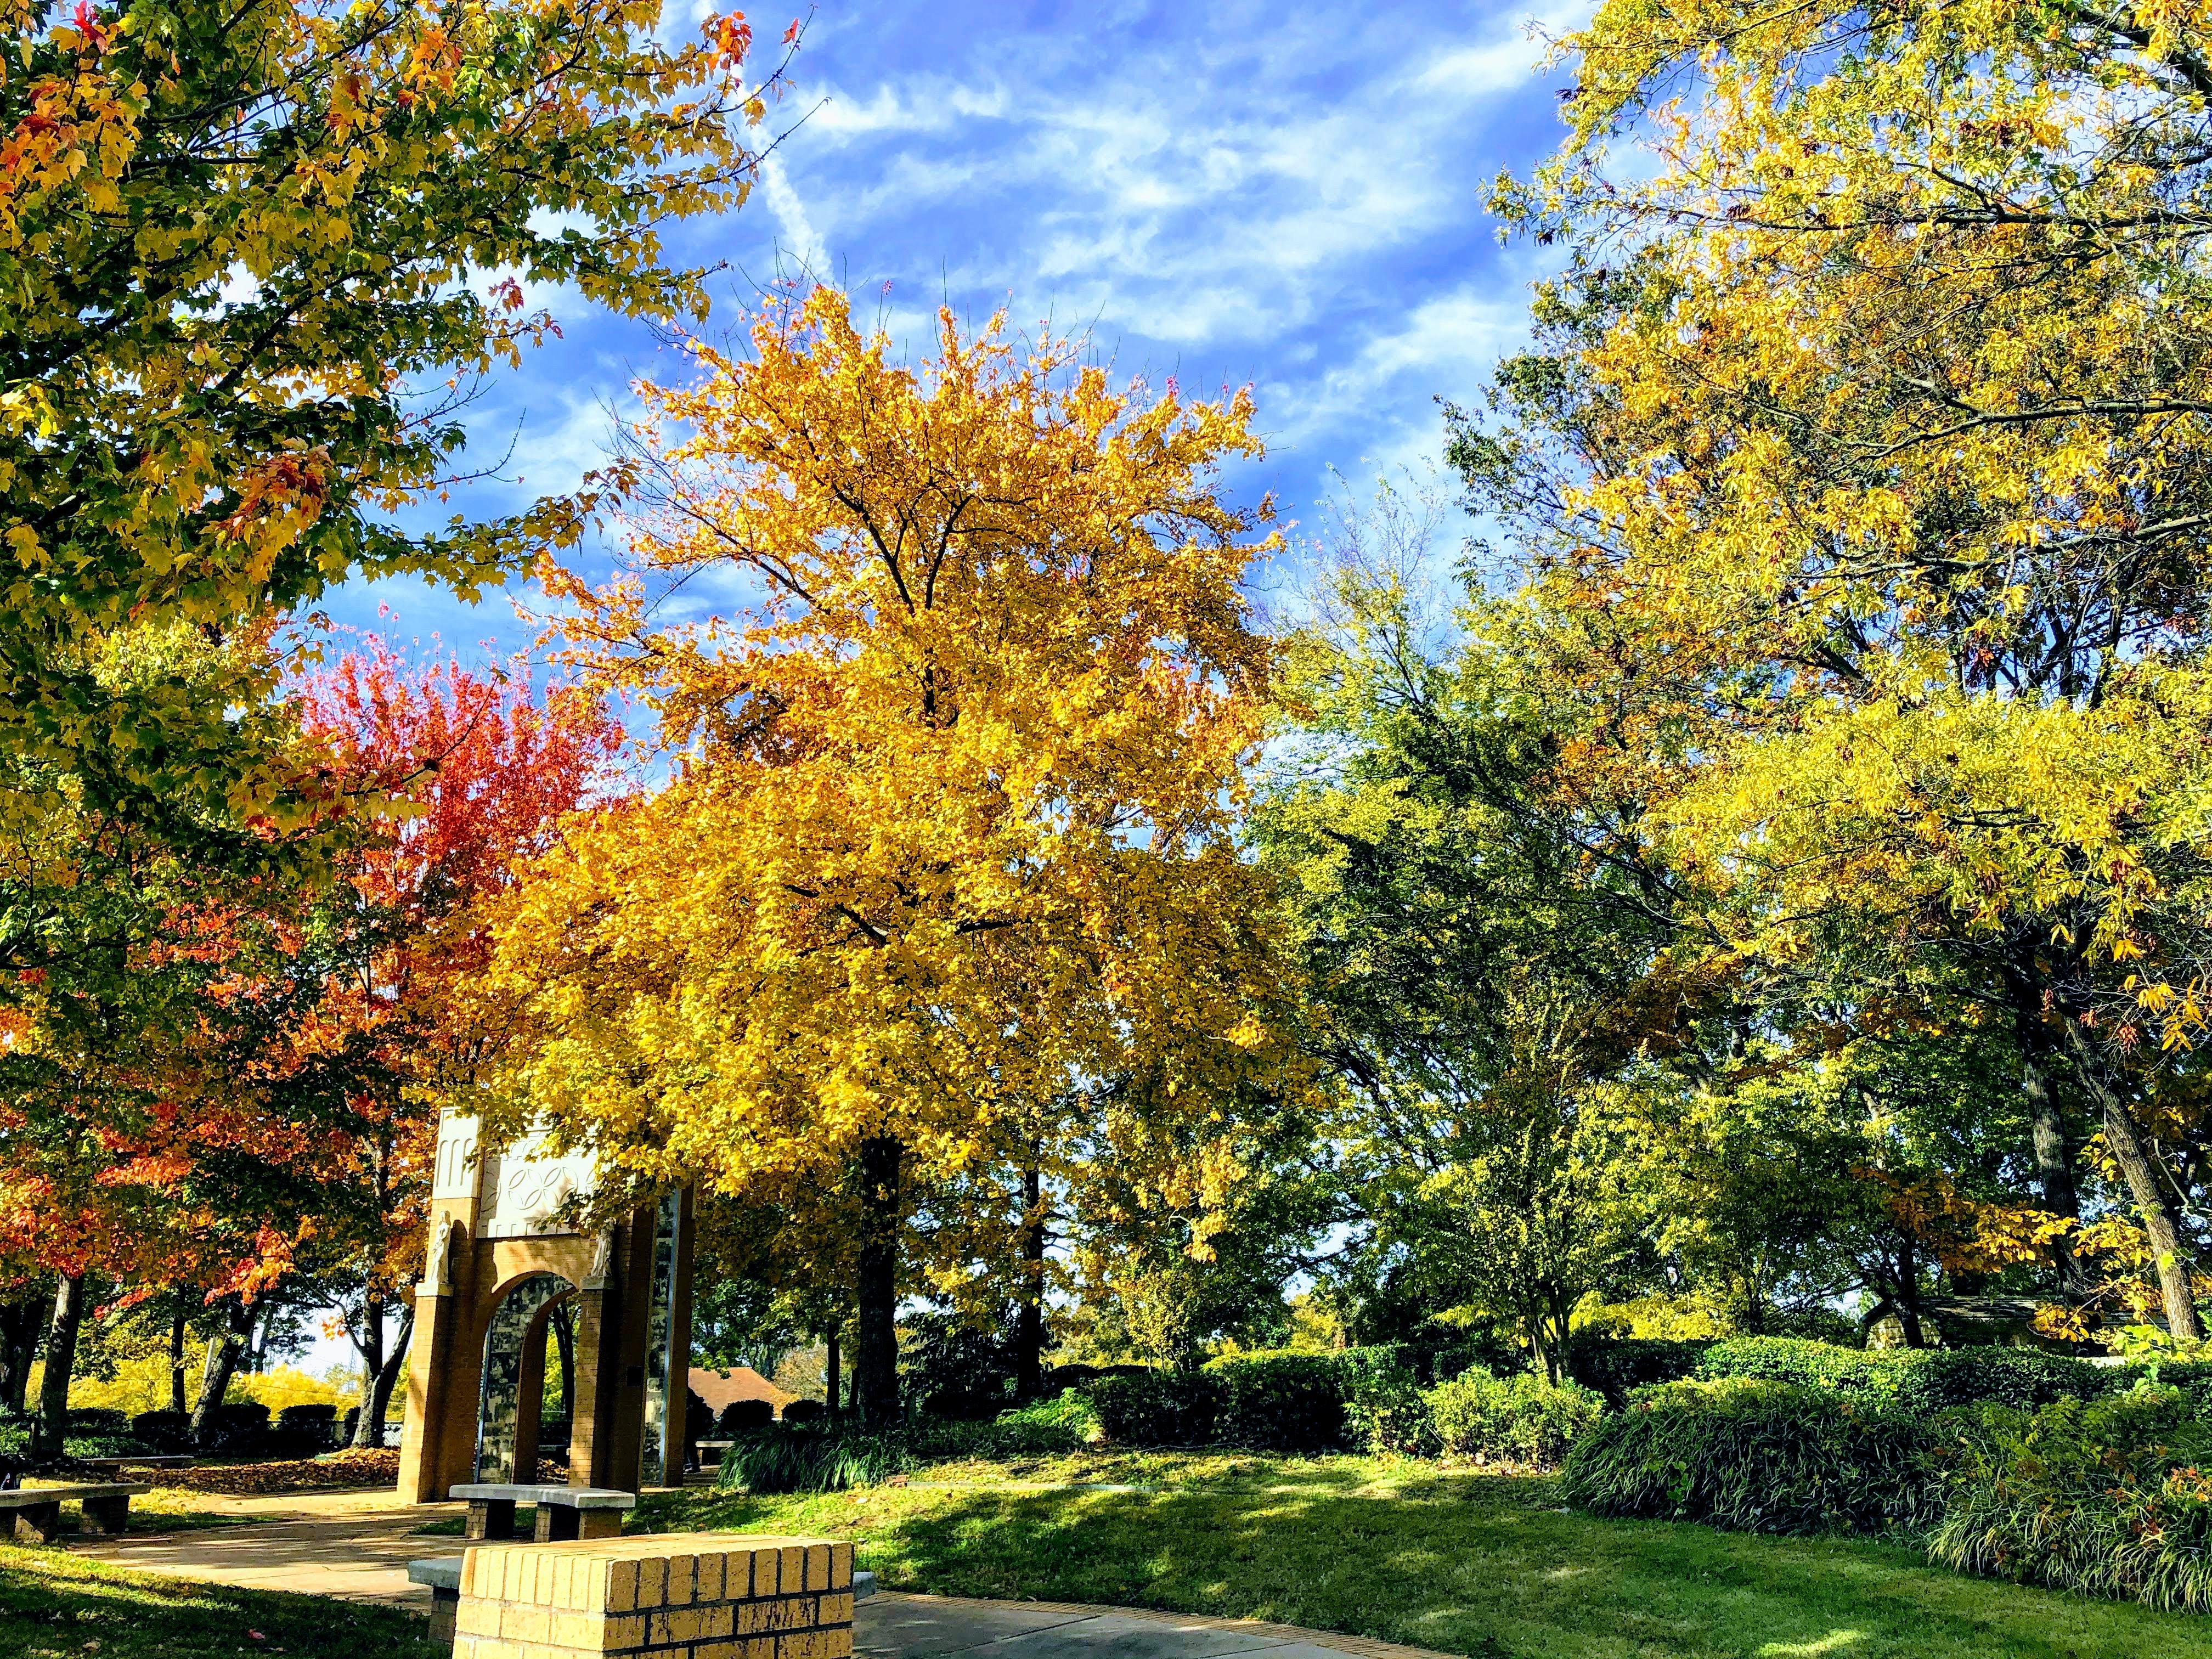 Fall colors in the commemorative garden